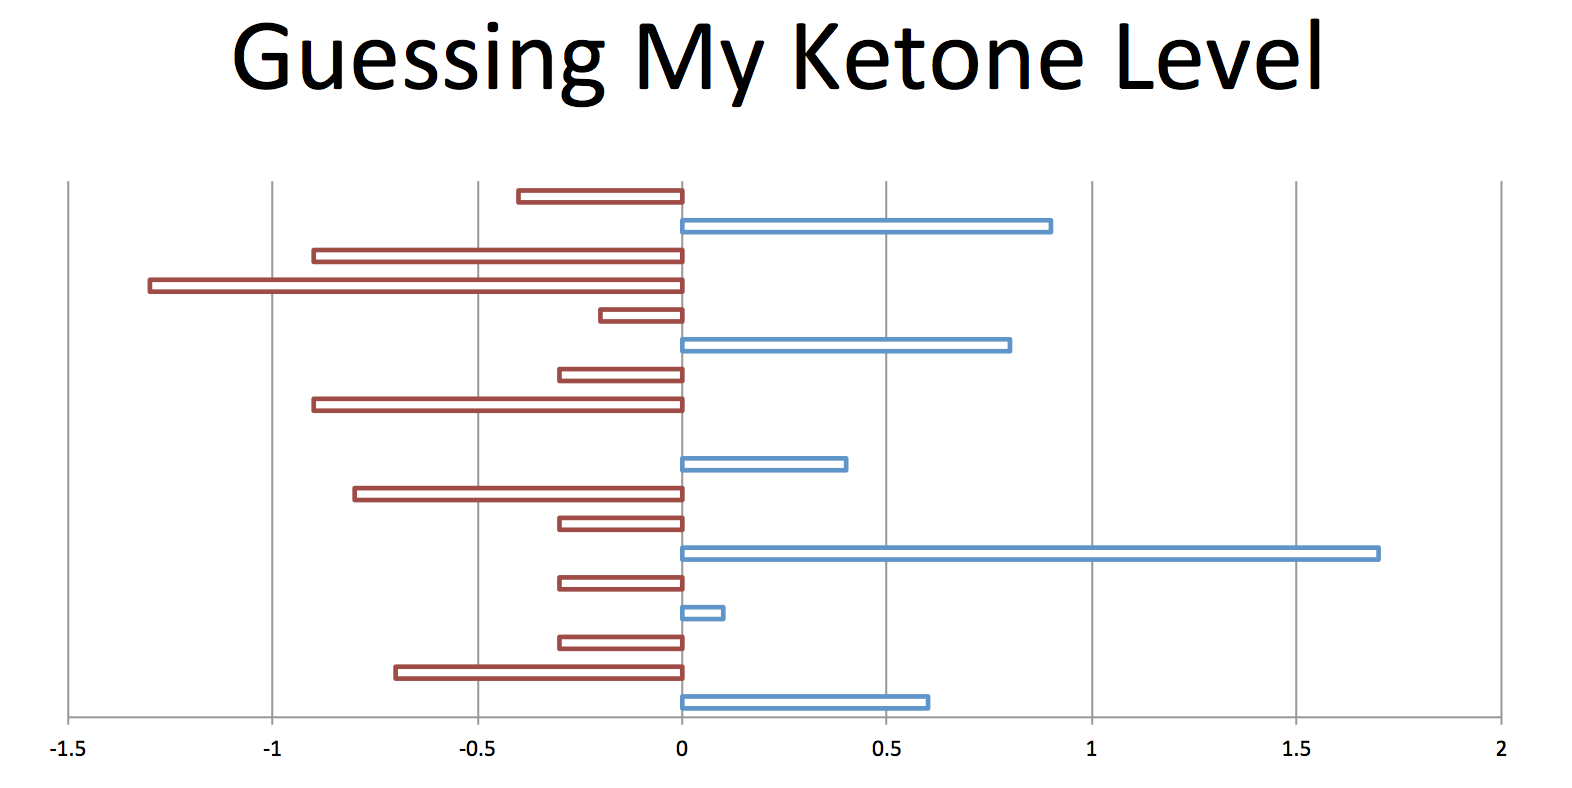 Breath Ketone Levels Chart